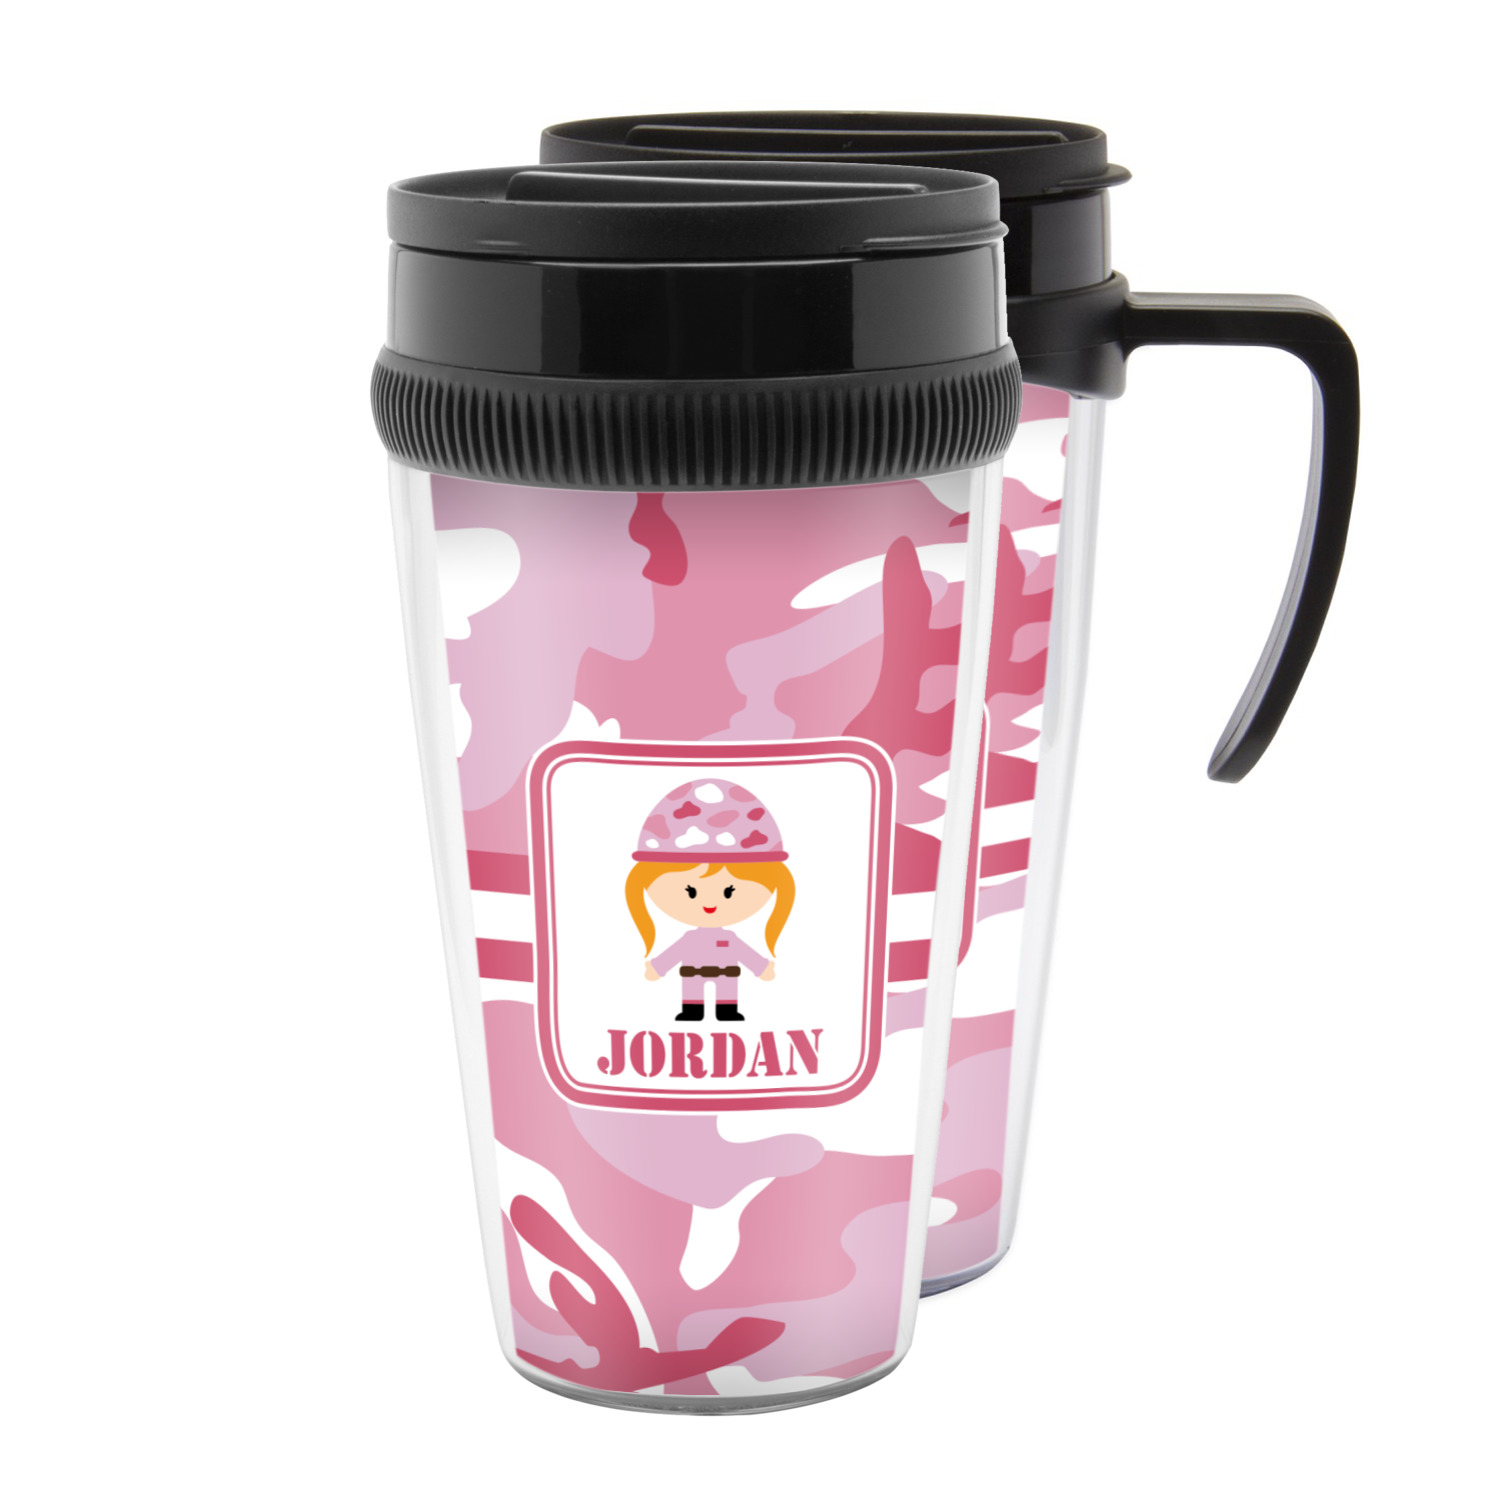 https://www.youcustomizeit.com/common/MAKE/40855/Pink-Camo-Acrylic-Travel-Mugs.jpg?lm=1595603118